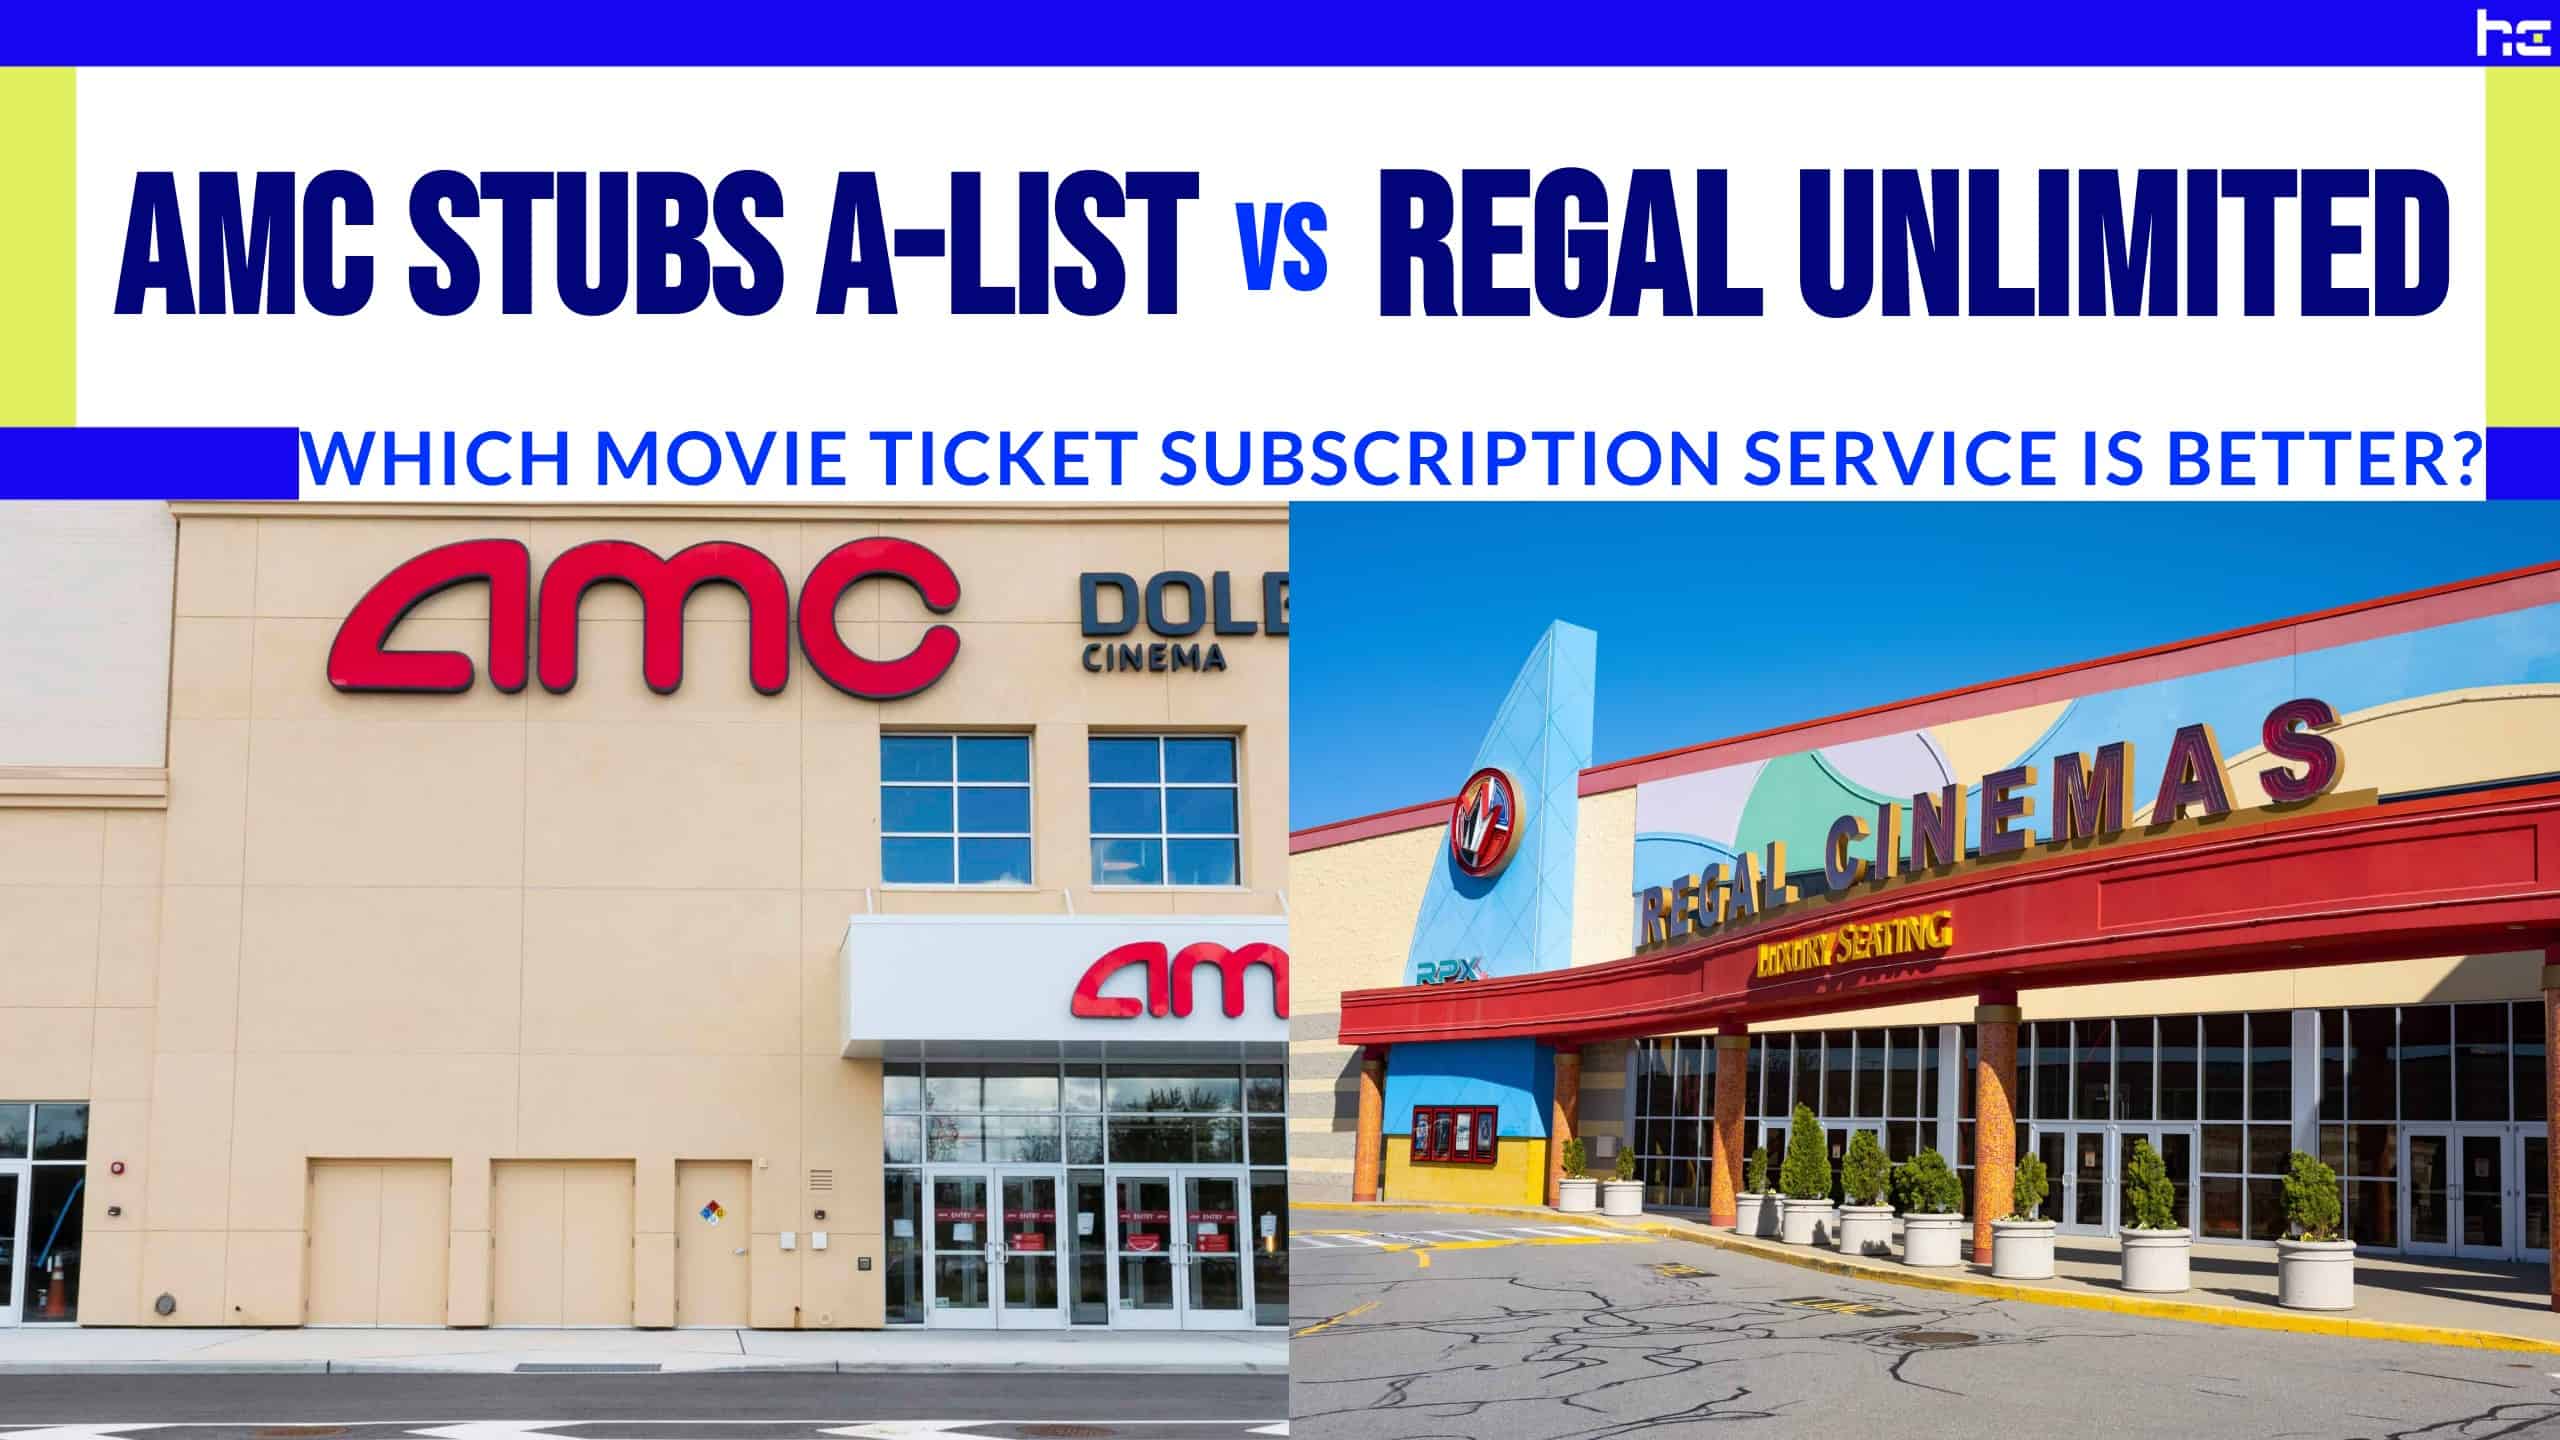 AMC Stubs A-List vs Regal Unlimited featured image